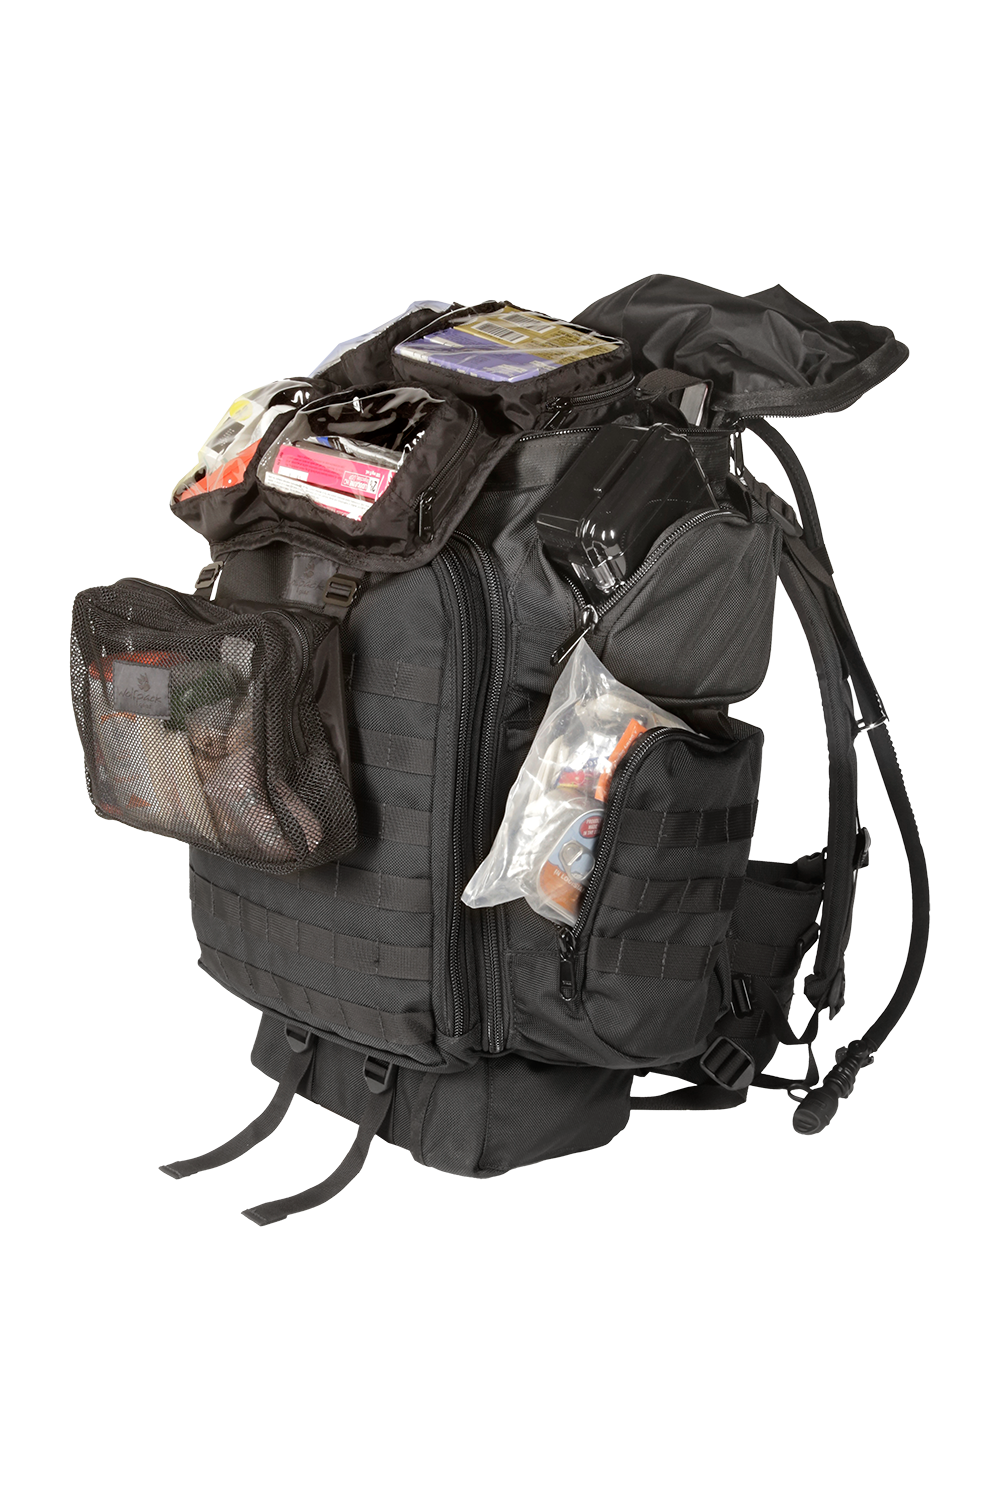 Wolfpack Gear Wolfpack Reaction Medic Pack